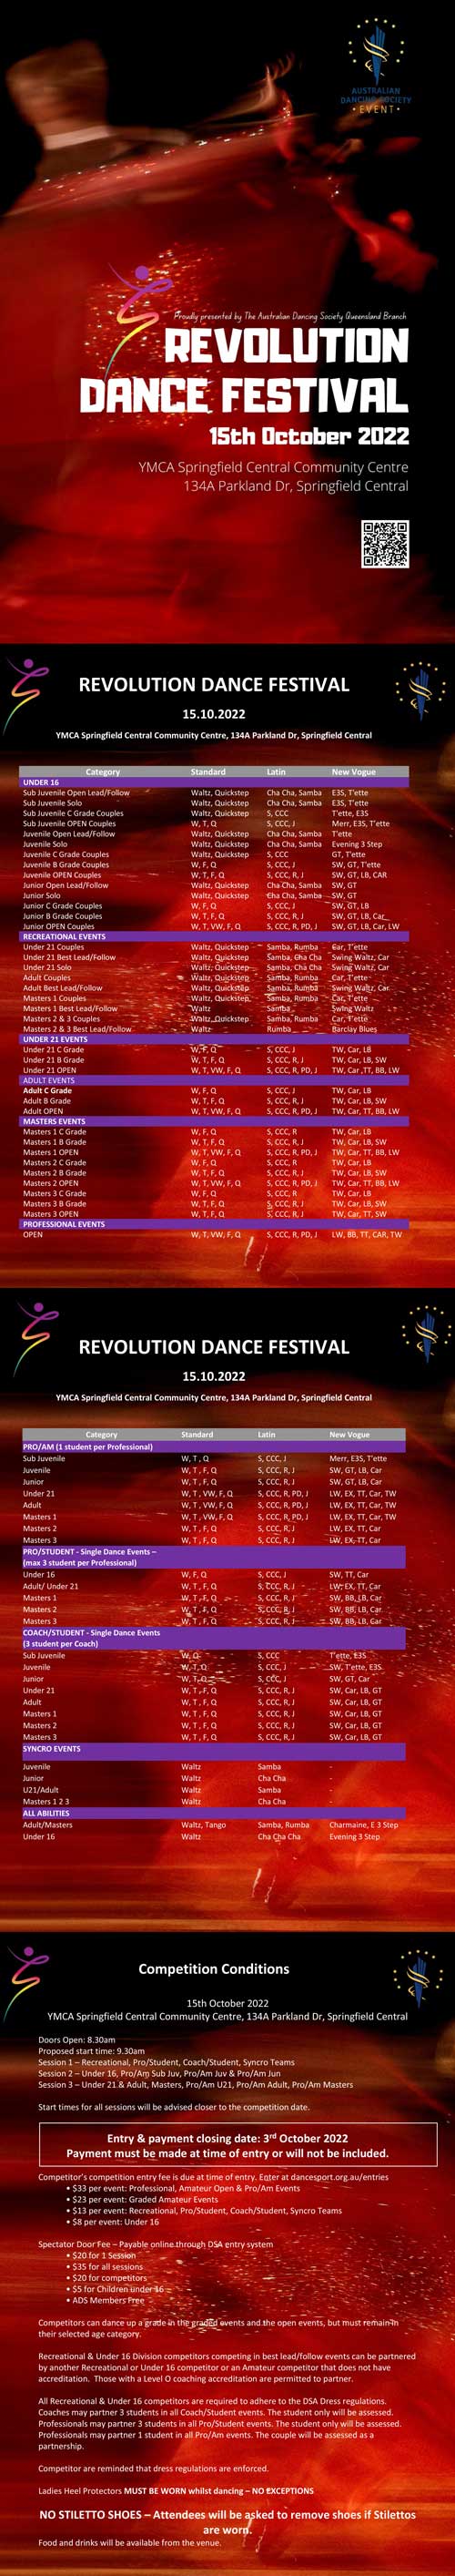 Syllabus for 2022 ADS Qld Revolution Dance Festival